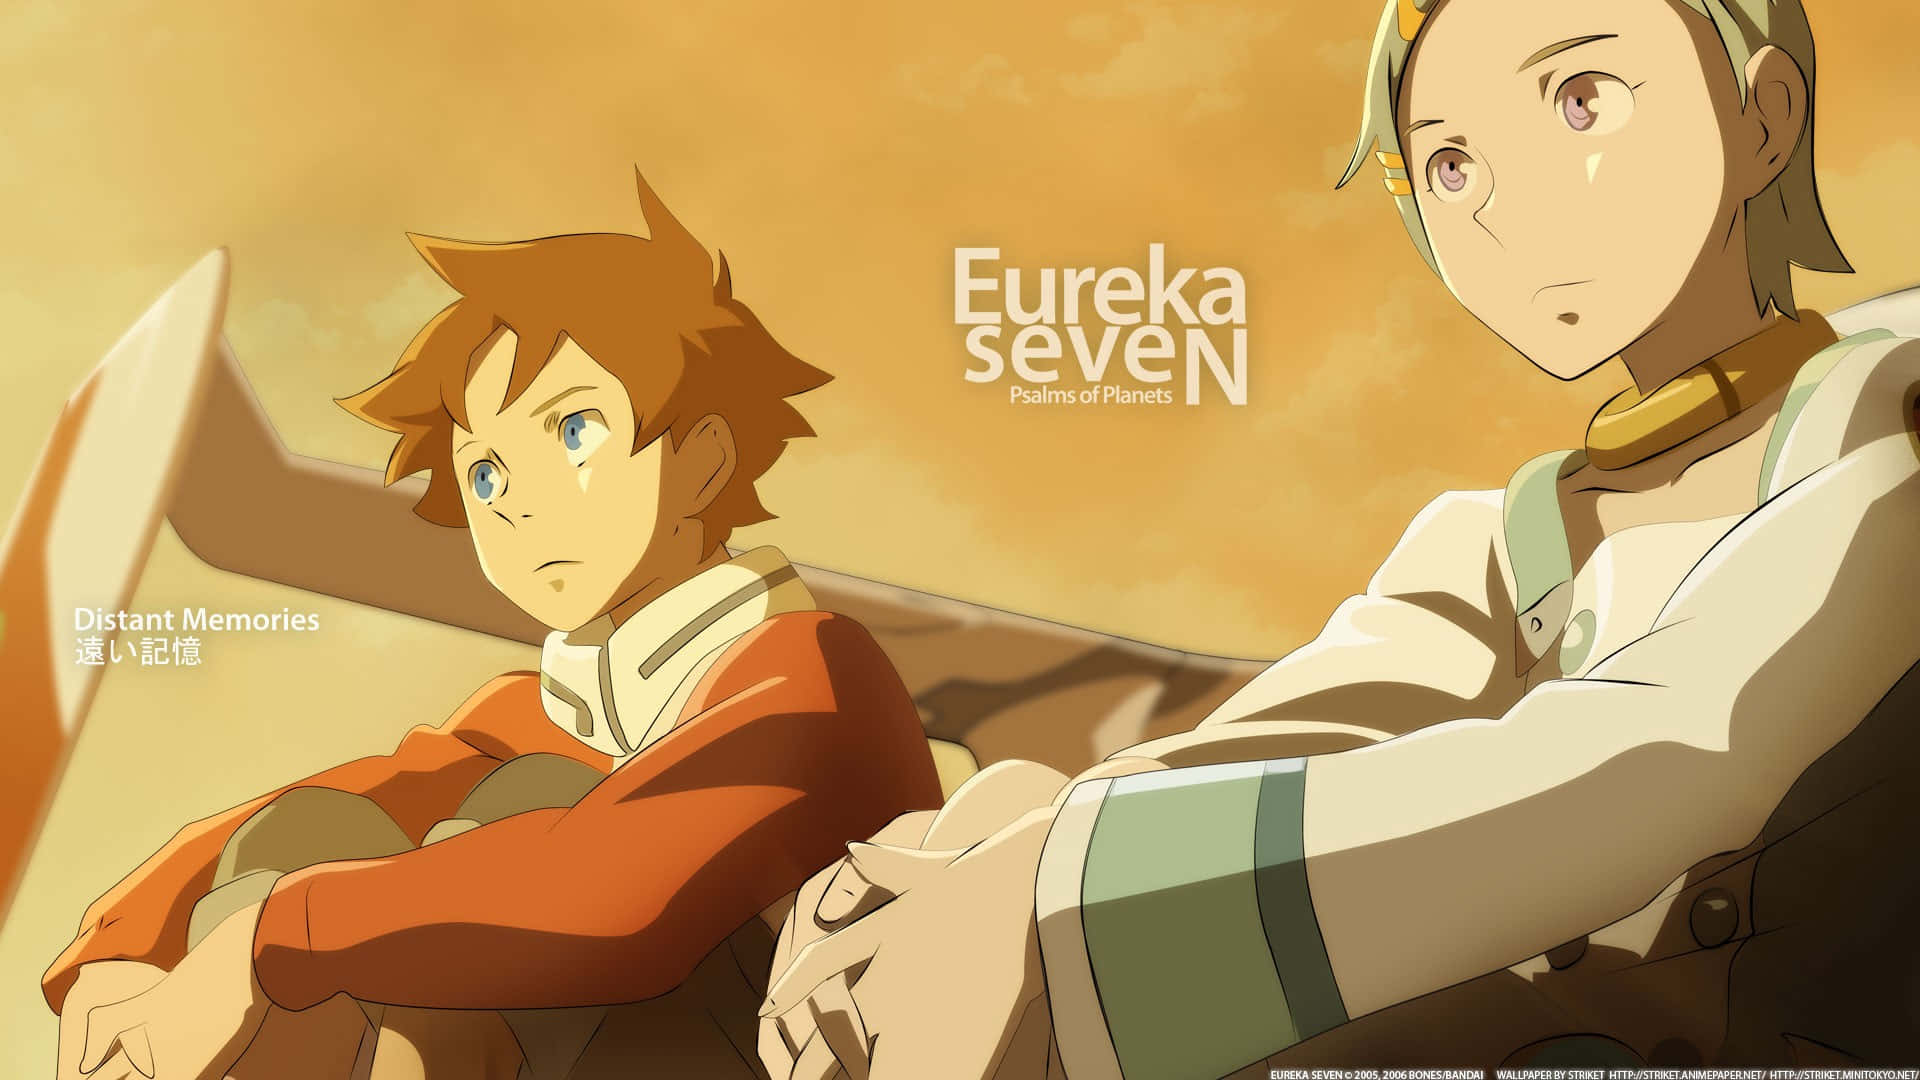 Questisono Eureka E Renton Dalla Famosa Serie Anime Eureka Seven!